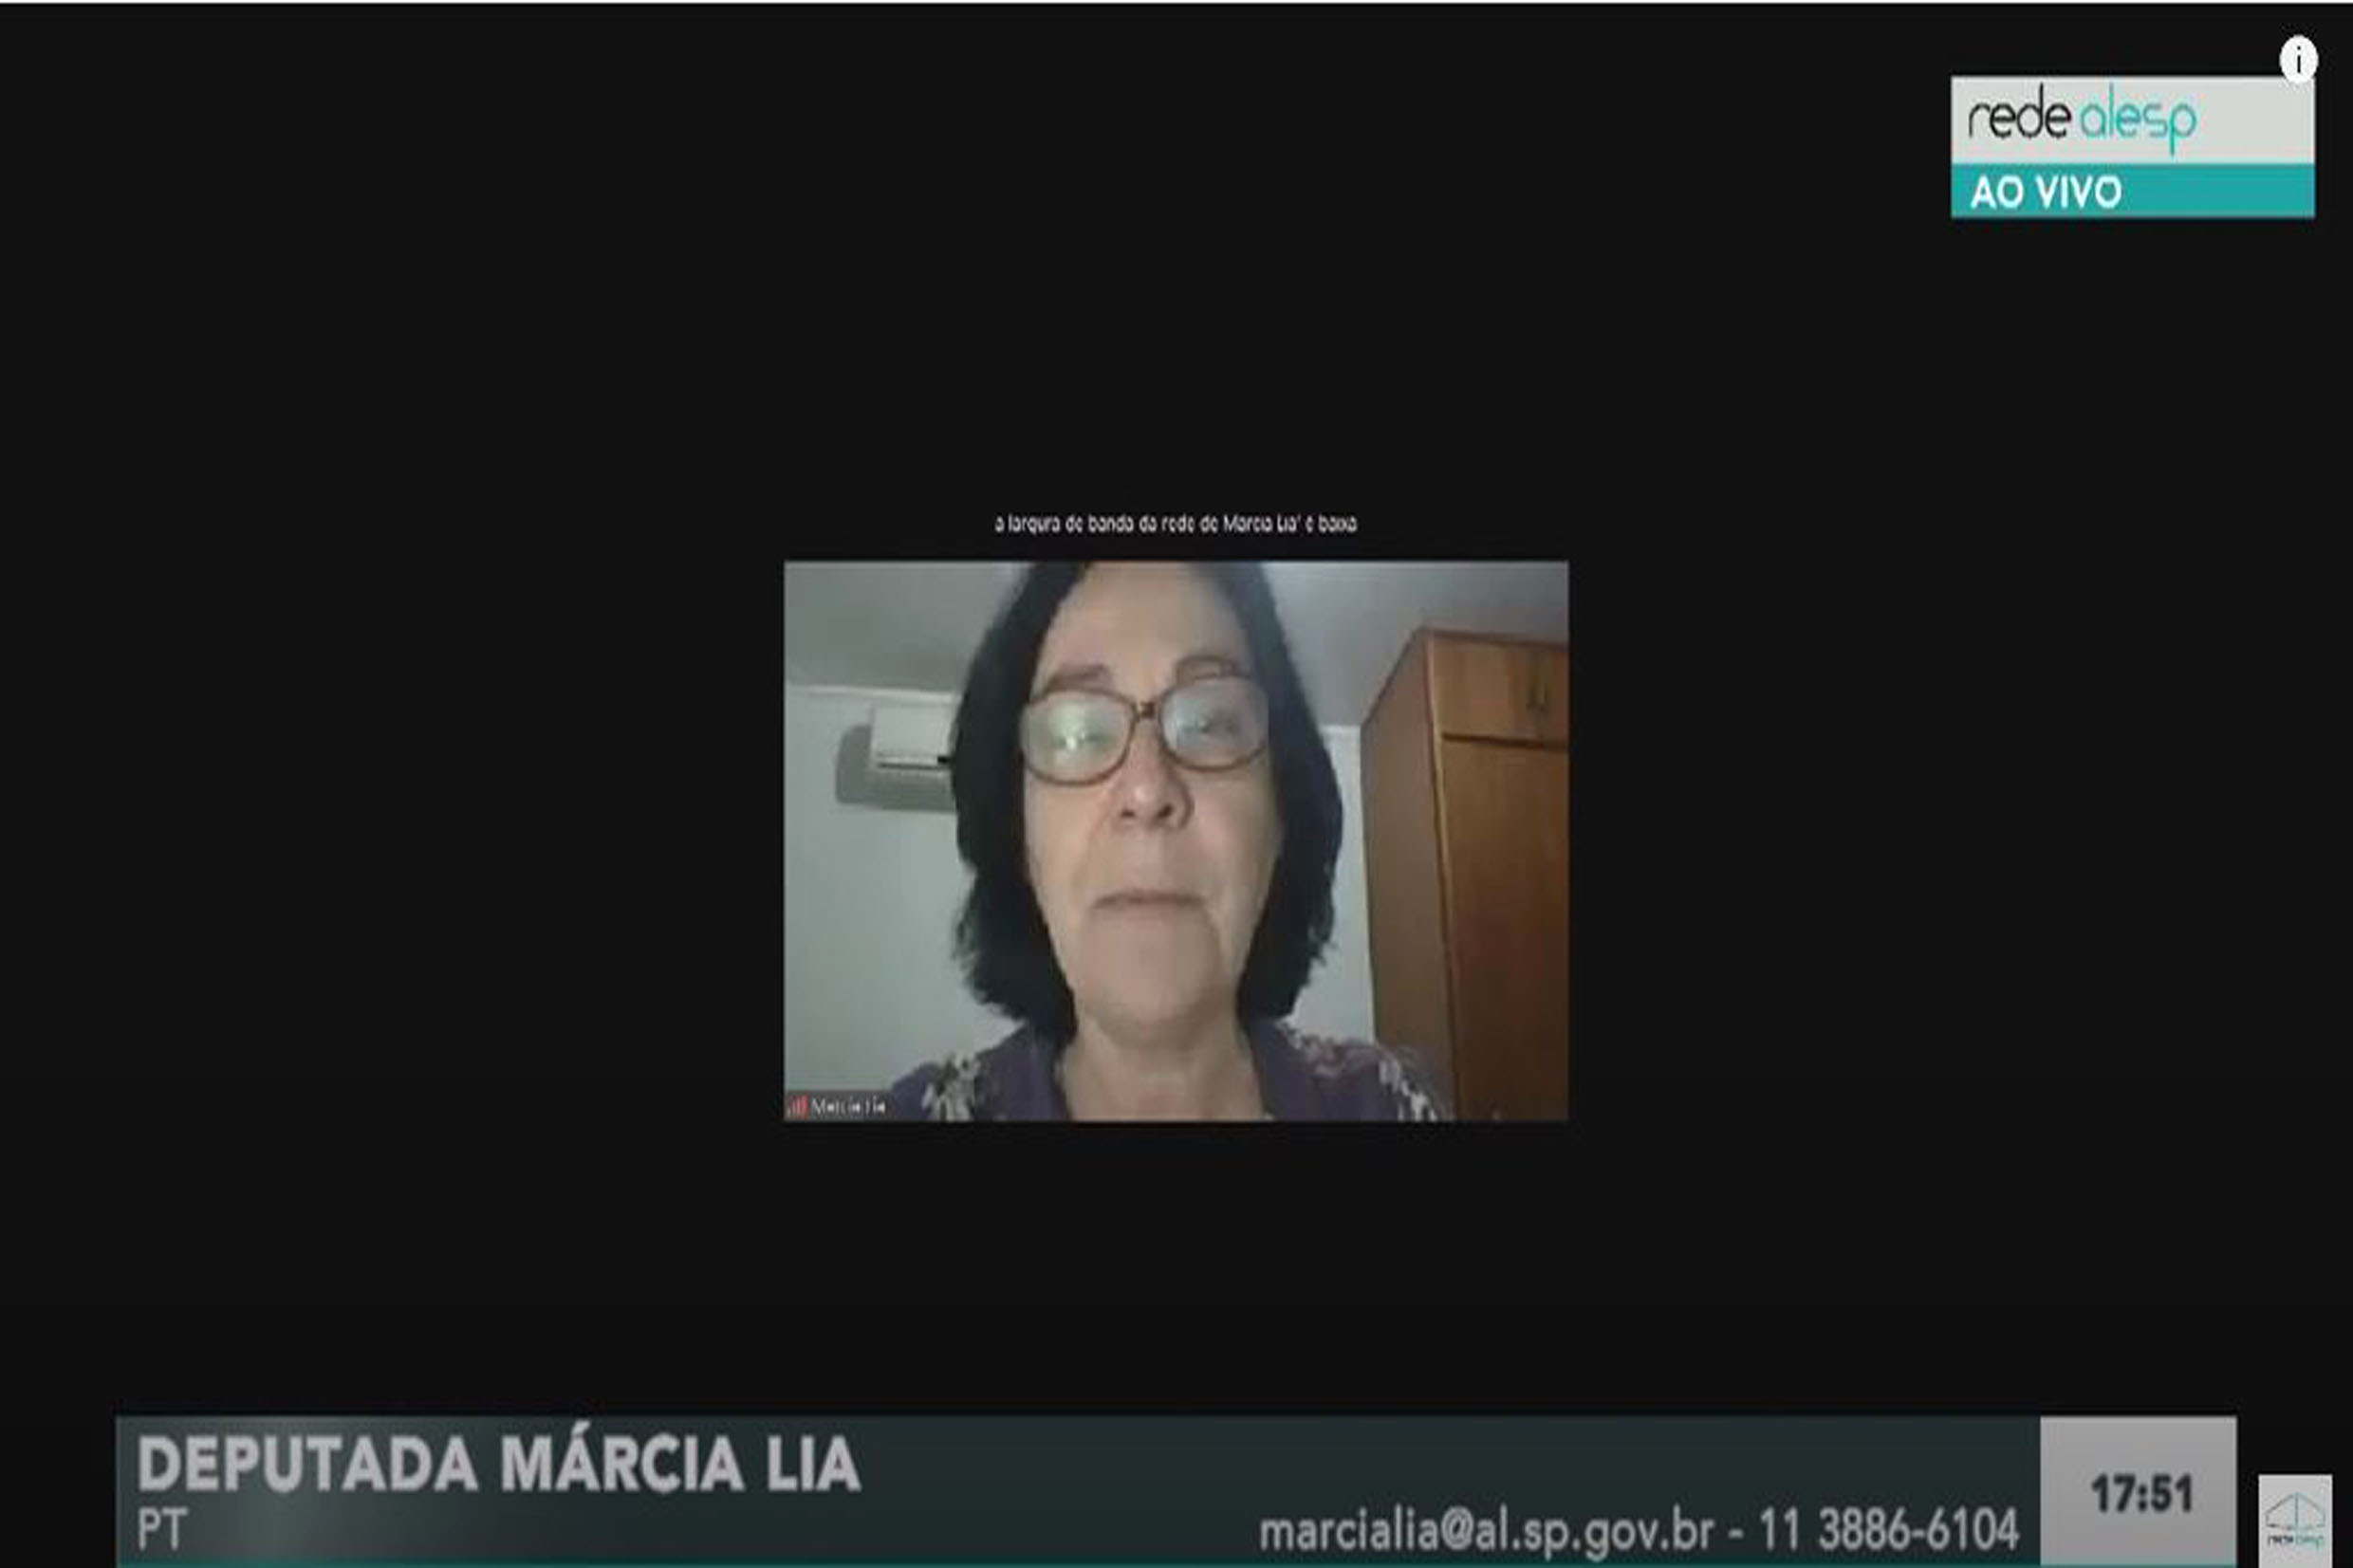 Marcia Lia<a style='float:right;color:#ccc' href='https://www3.al.sp.gov.br/repositorio/noticia/N-07-2020/fg251589.jpg' target=_blank><i class='bi bi-zoom-in'></i> Clique para ver a imagem </a>